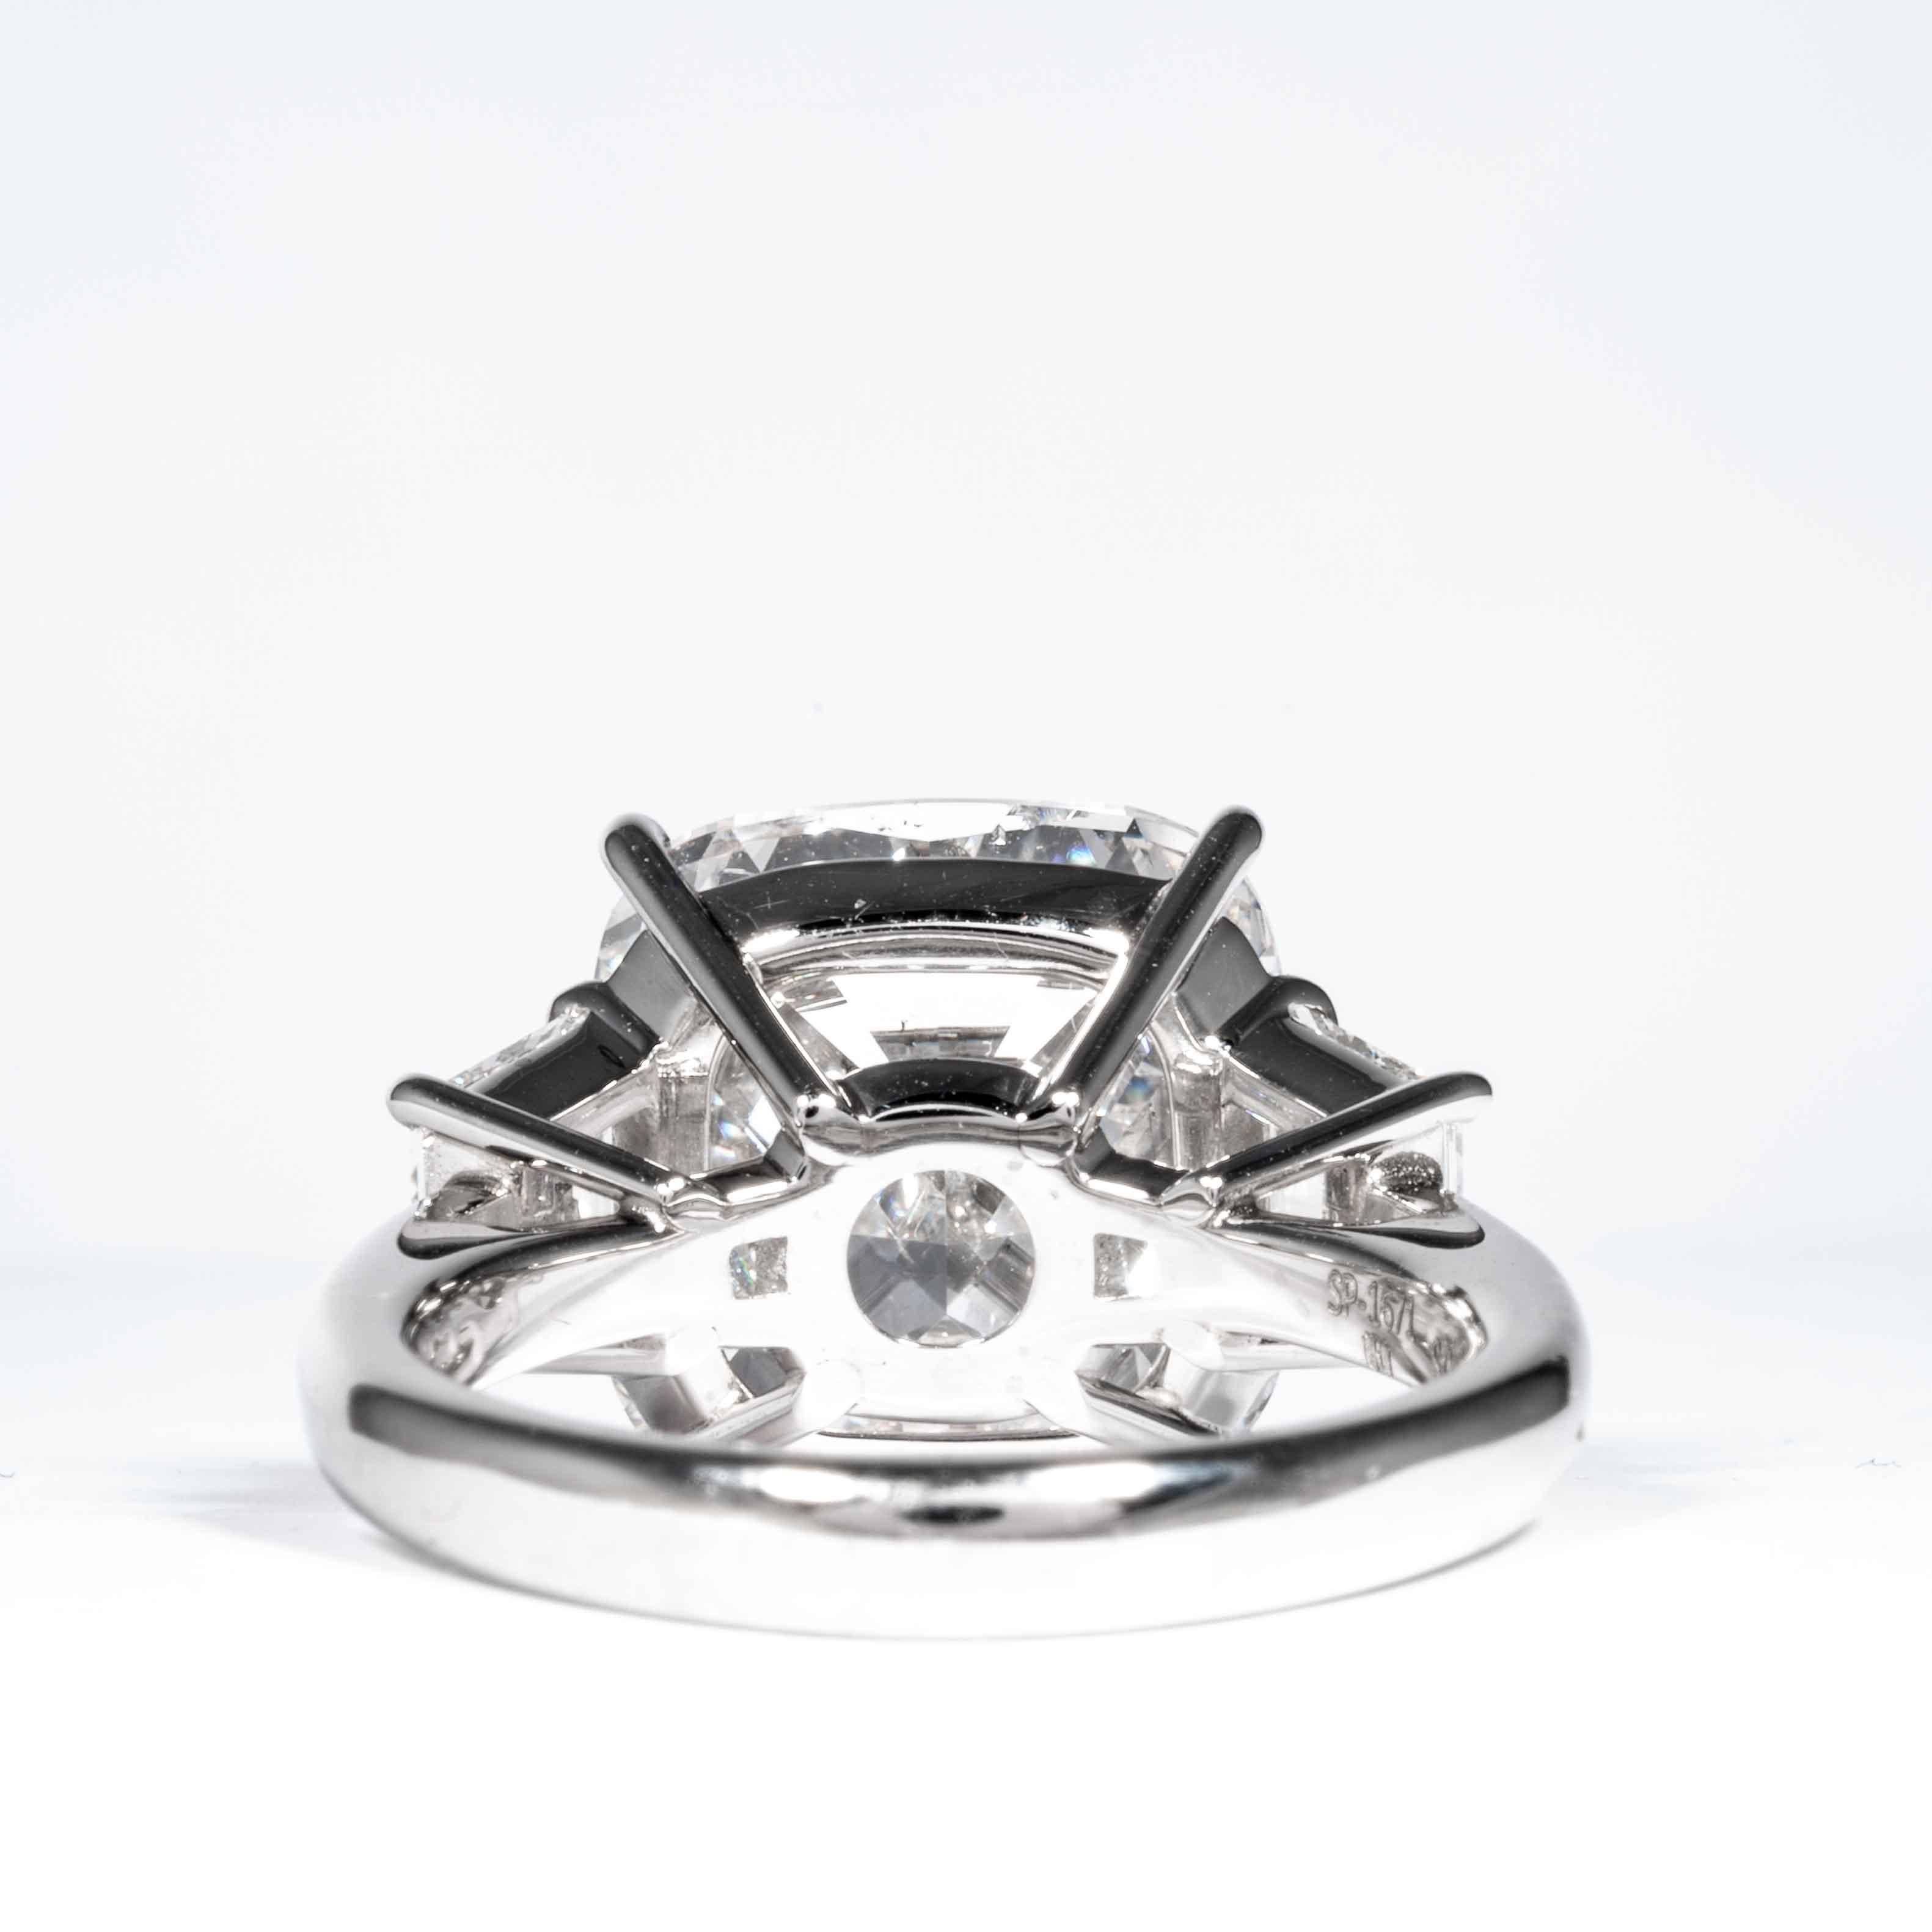 Women's Shreve, Crump & Low GIA Certified 10.01 Carat G SI1 Cushion Cut Diamond Ring For Sale